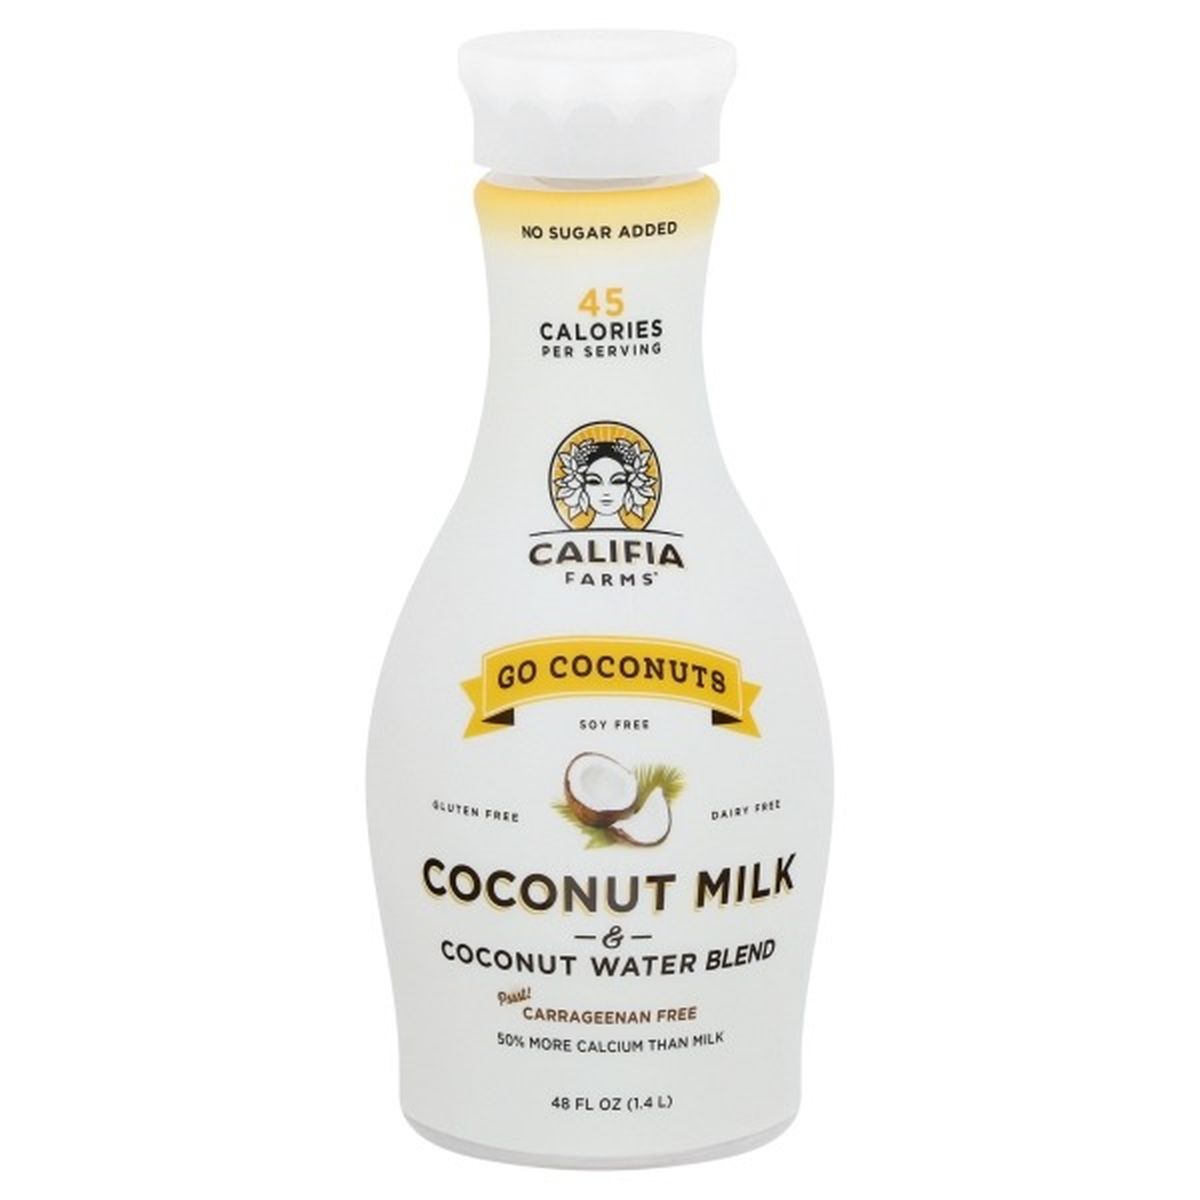 Calories in Califia Farms Coconut Milk & Coconut Water Blend, Go Coconuts